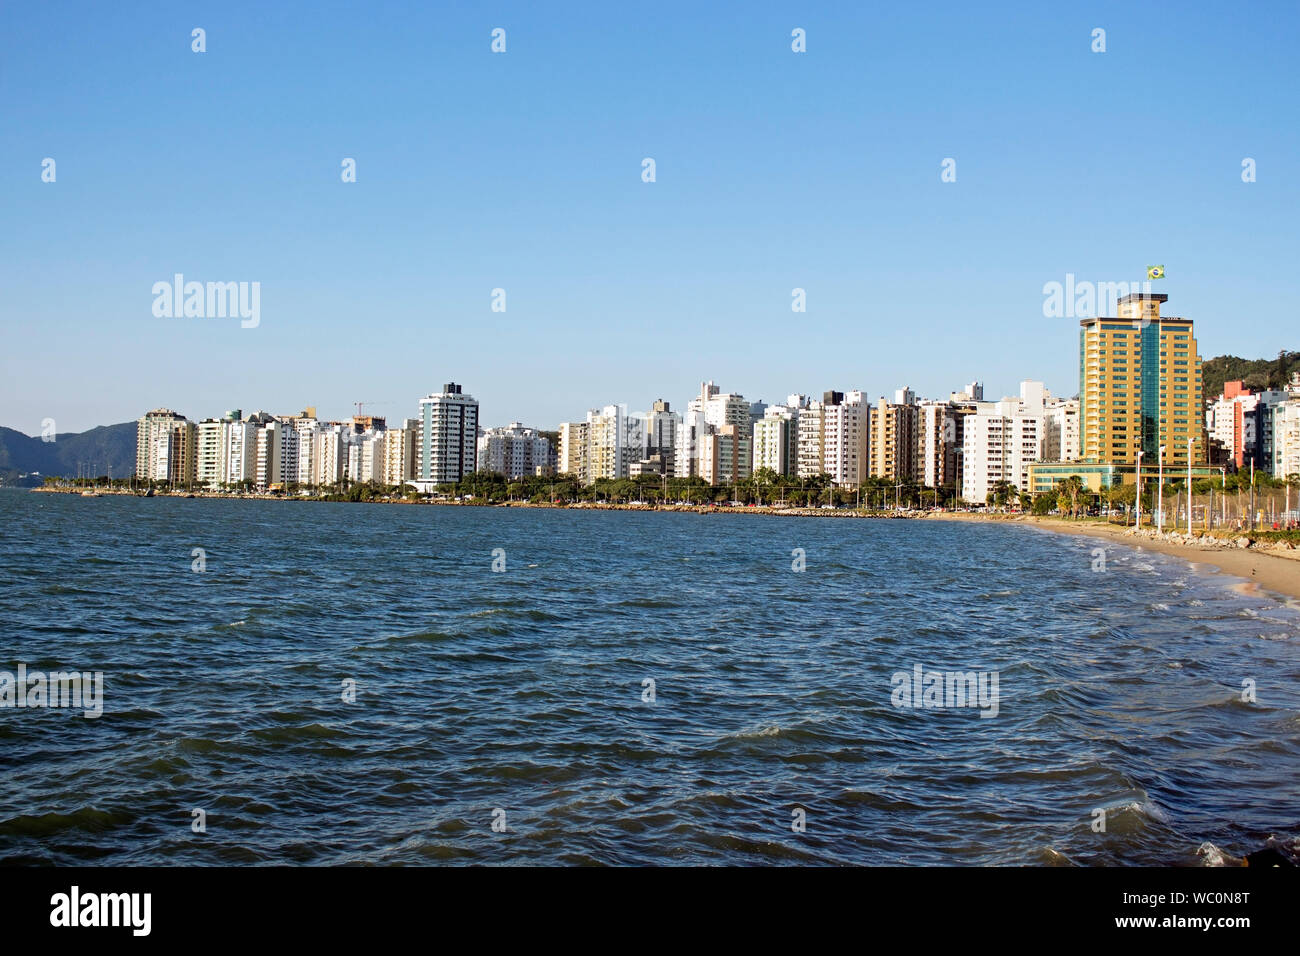 Beira Mar Norte Avenue, in der Hauptstadt von Florianopolis, Bundesstaat Santa Catarina - Brasilien Stockfoto